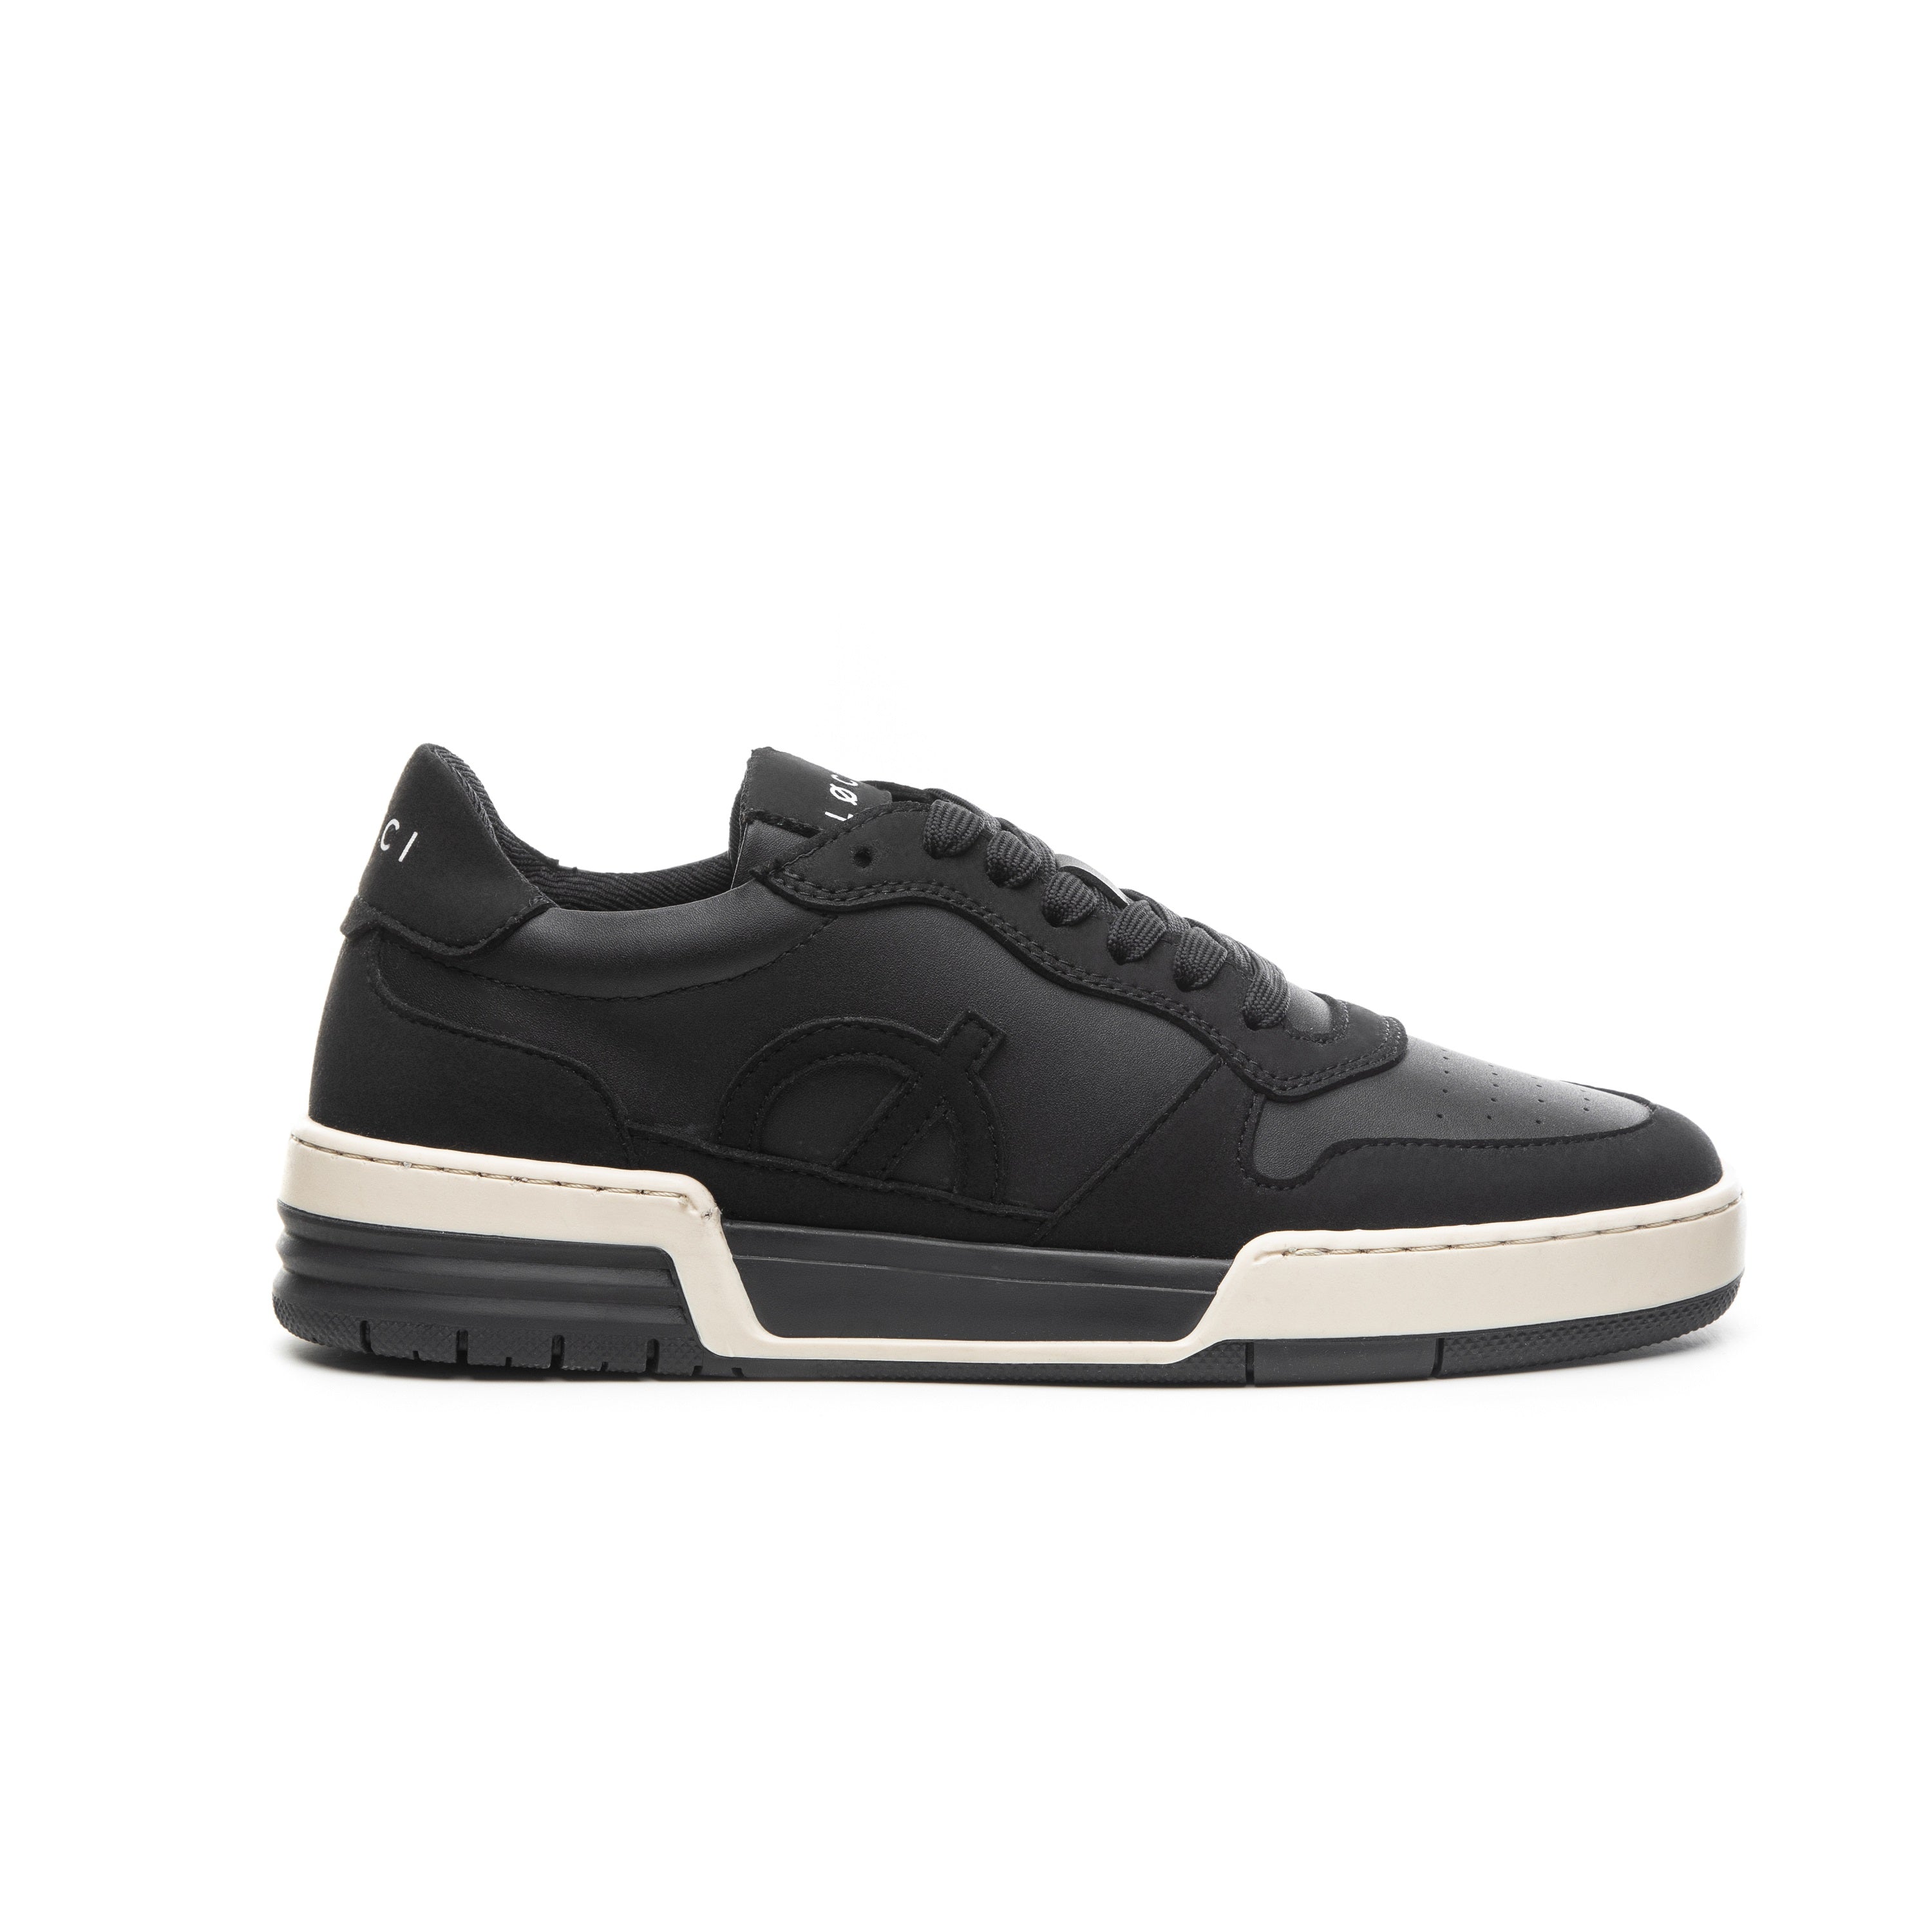 Loci Atom Sneaker Black/Black/Cream 3.5 